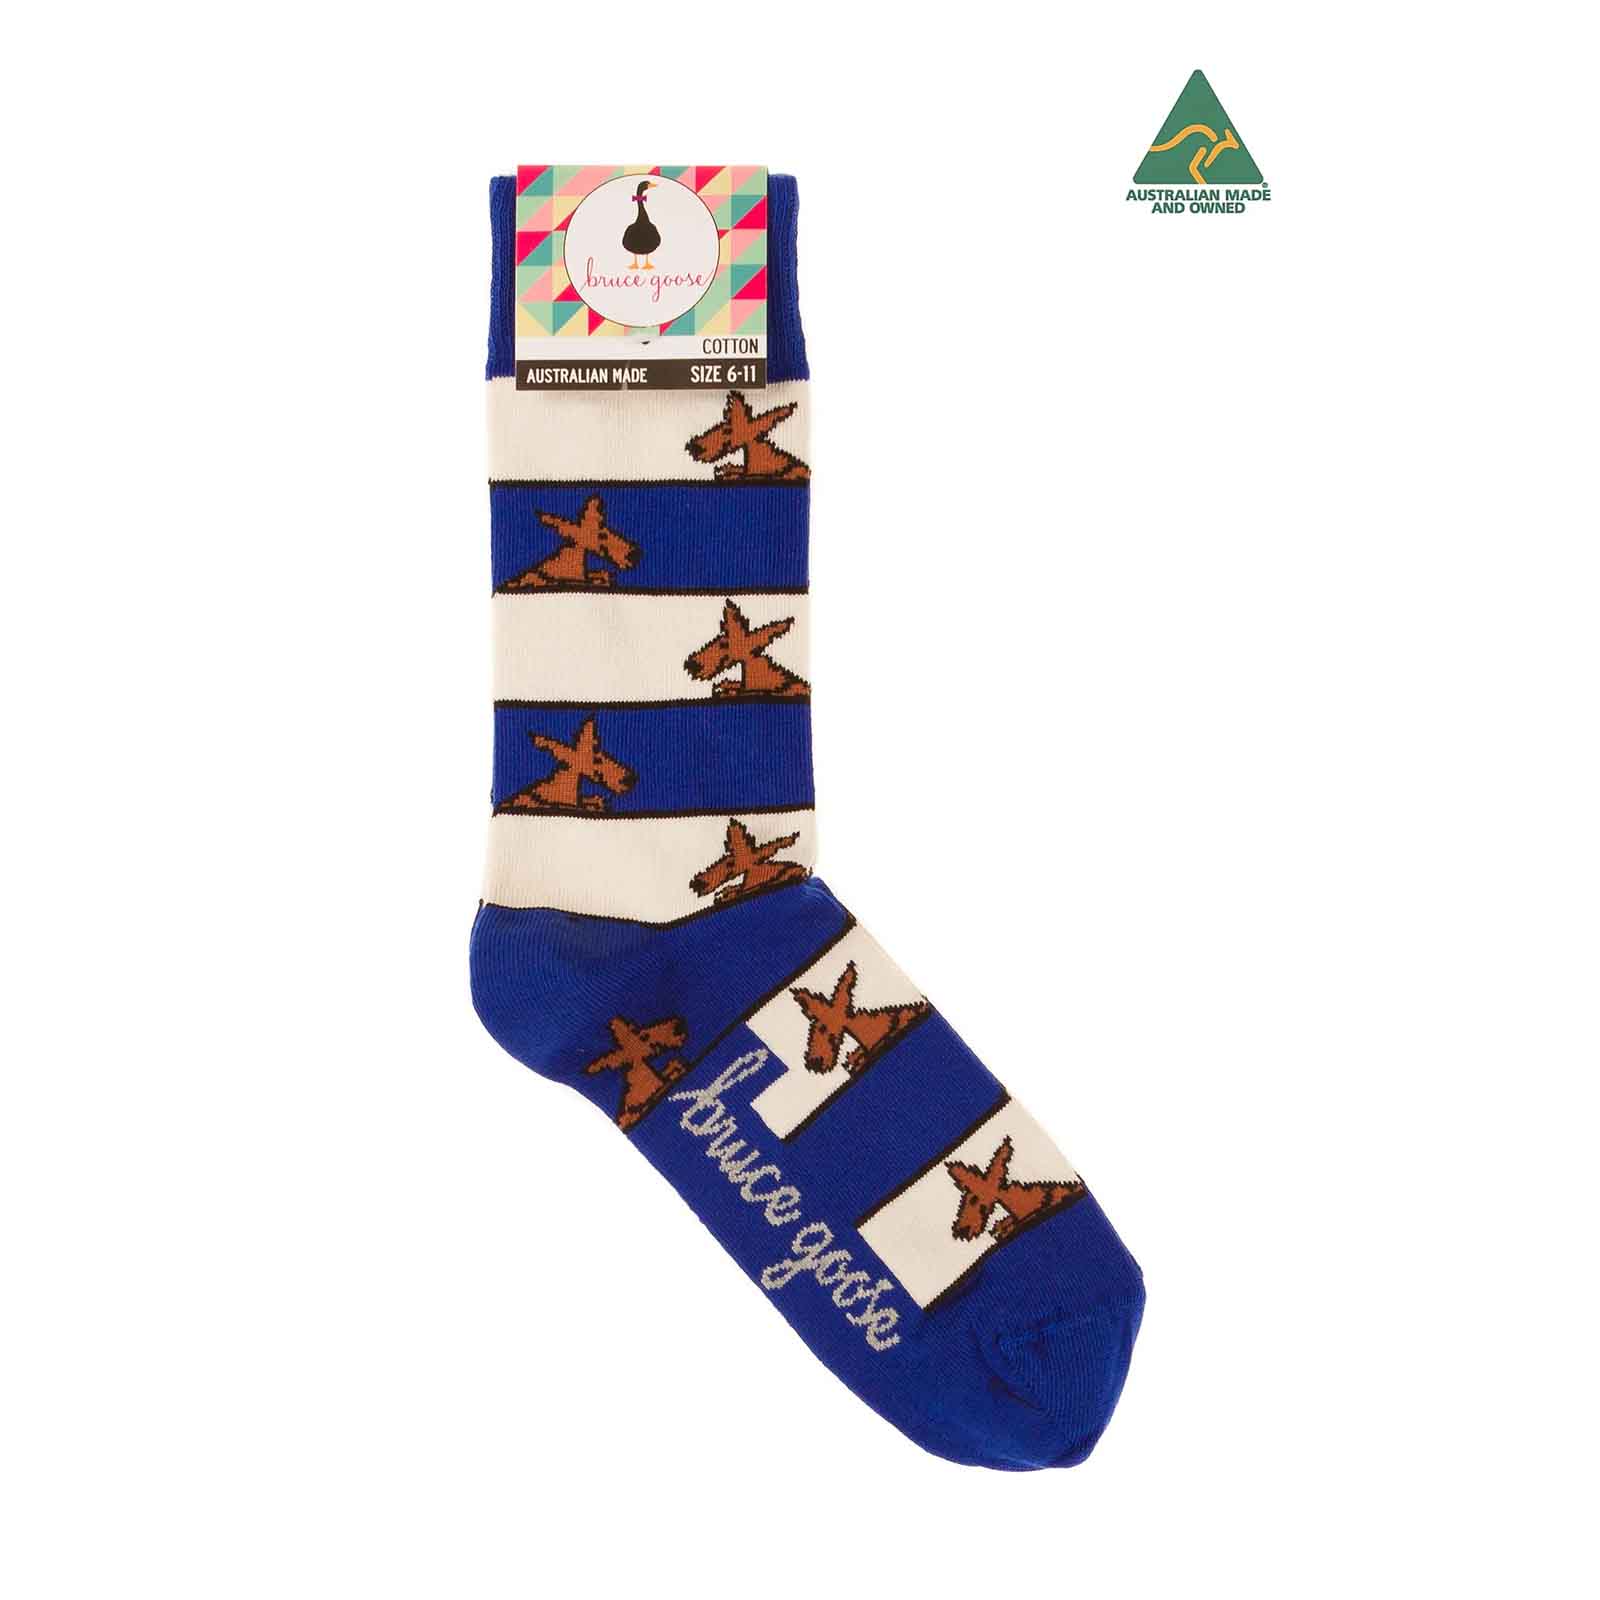 Socks-Stripey-Kangaroo-Royal-6-11-Single